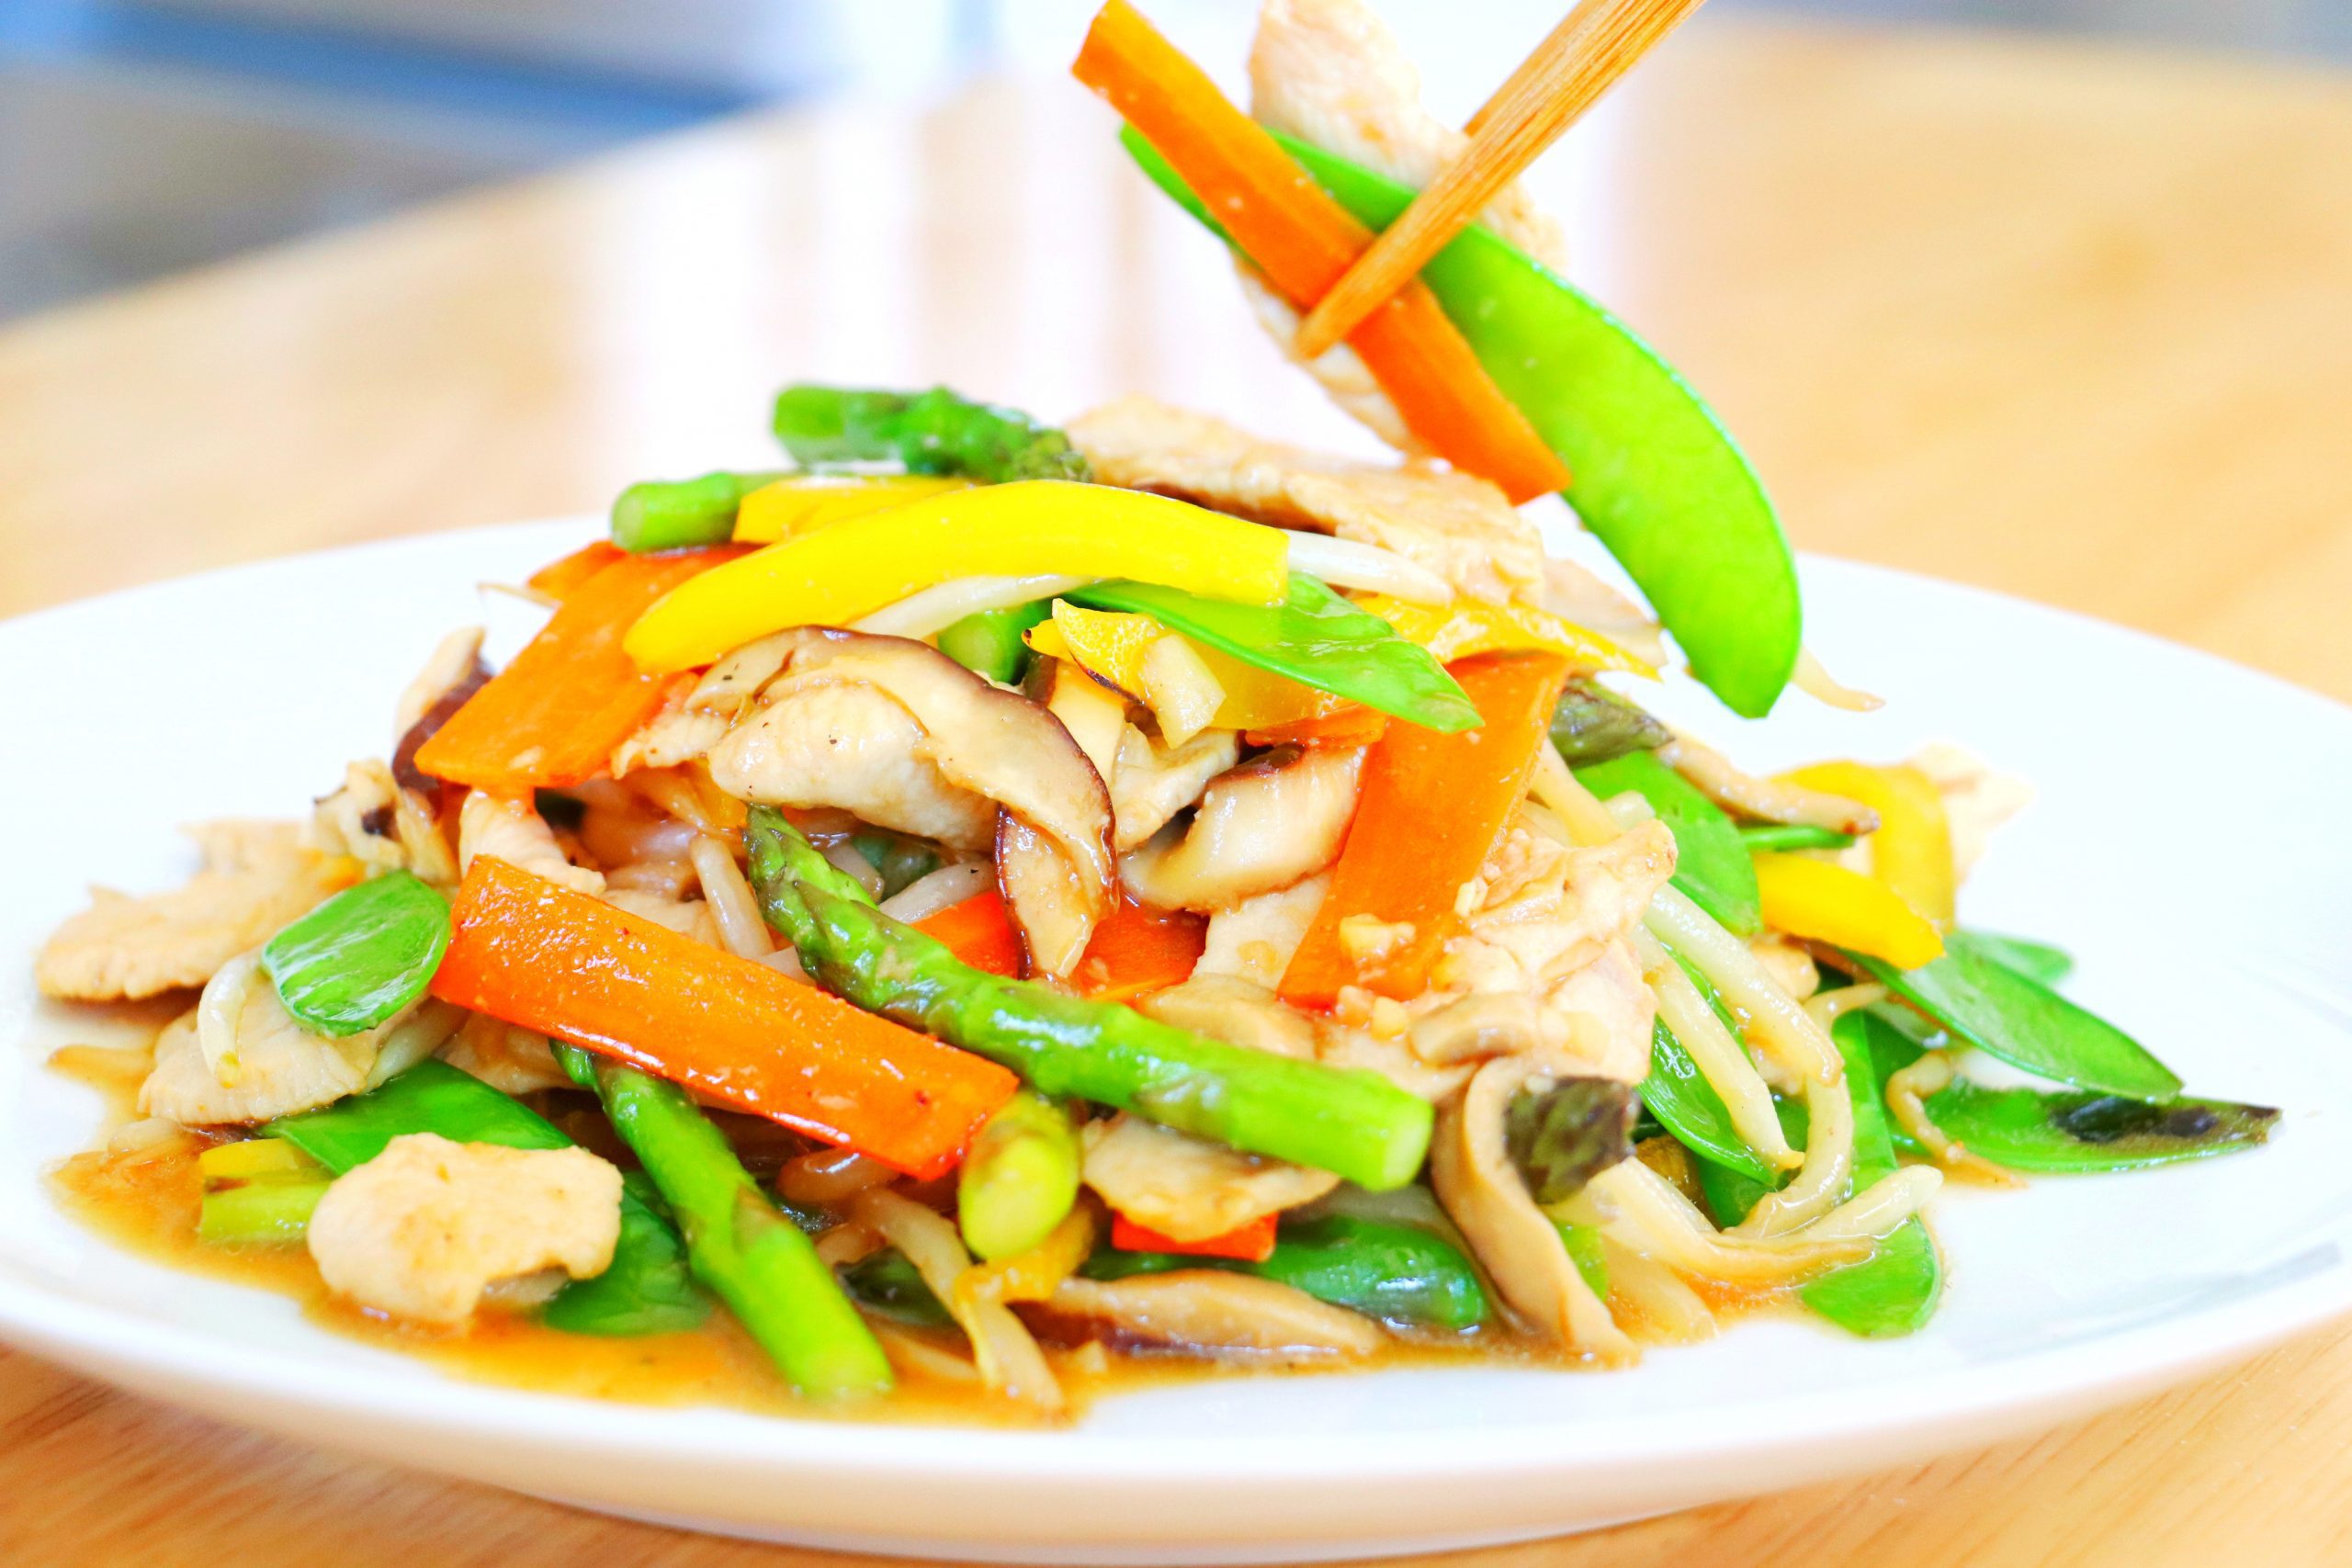 Best Shrimp Chop Suey - The Food Blog